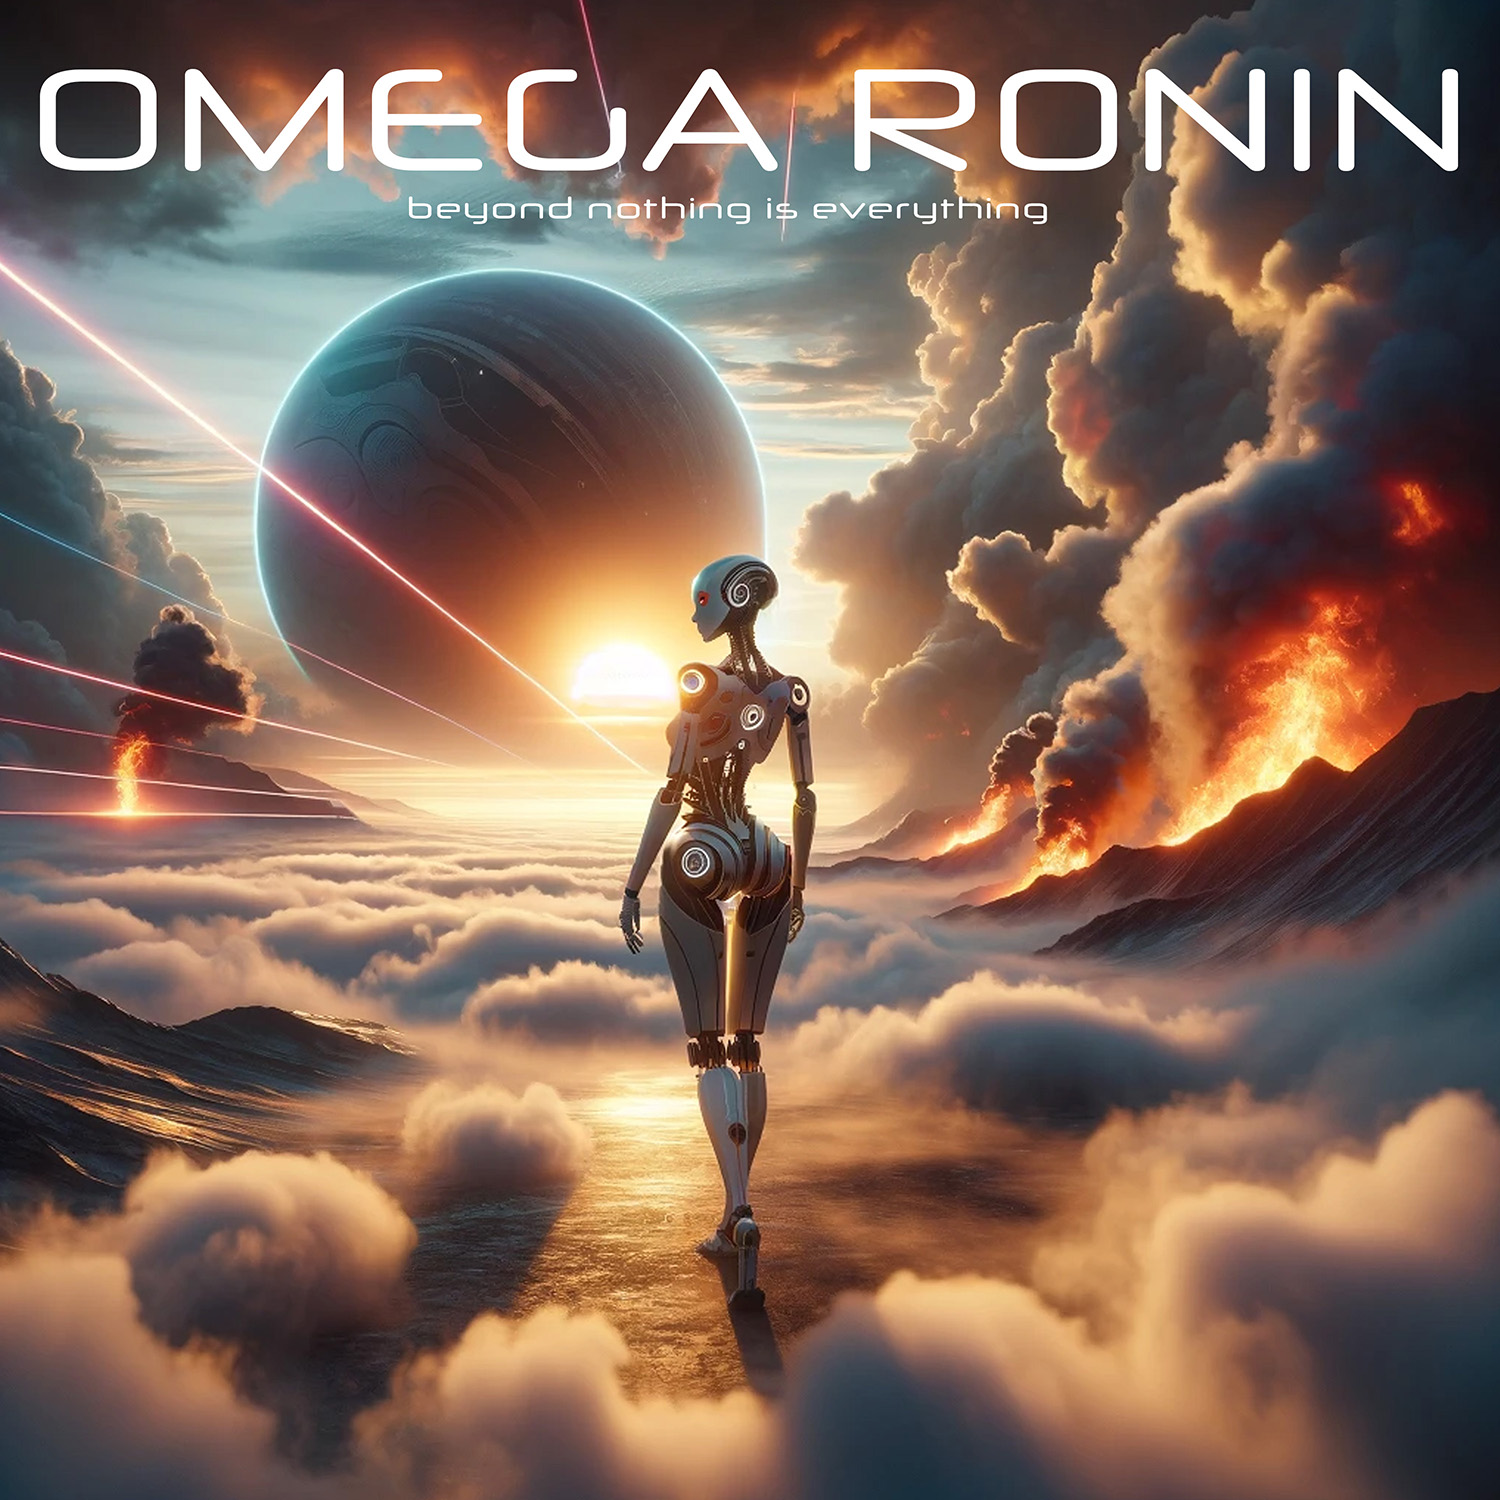 Omega Ronin: Beyond Nothing is Everything